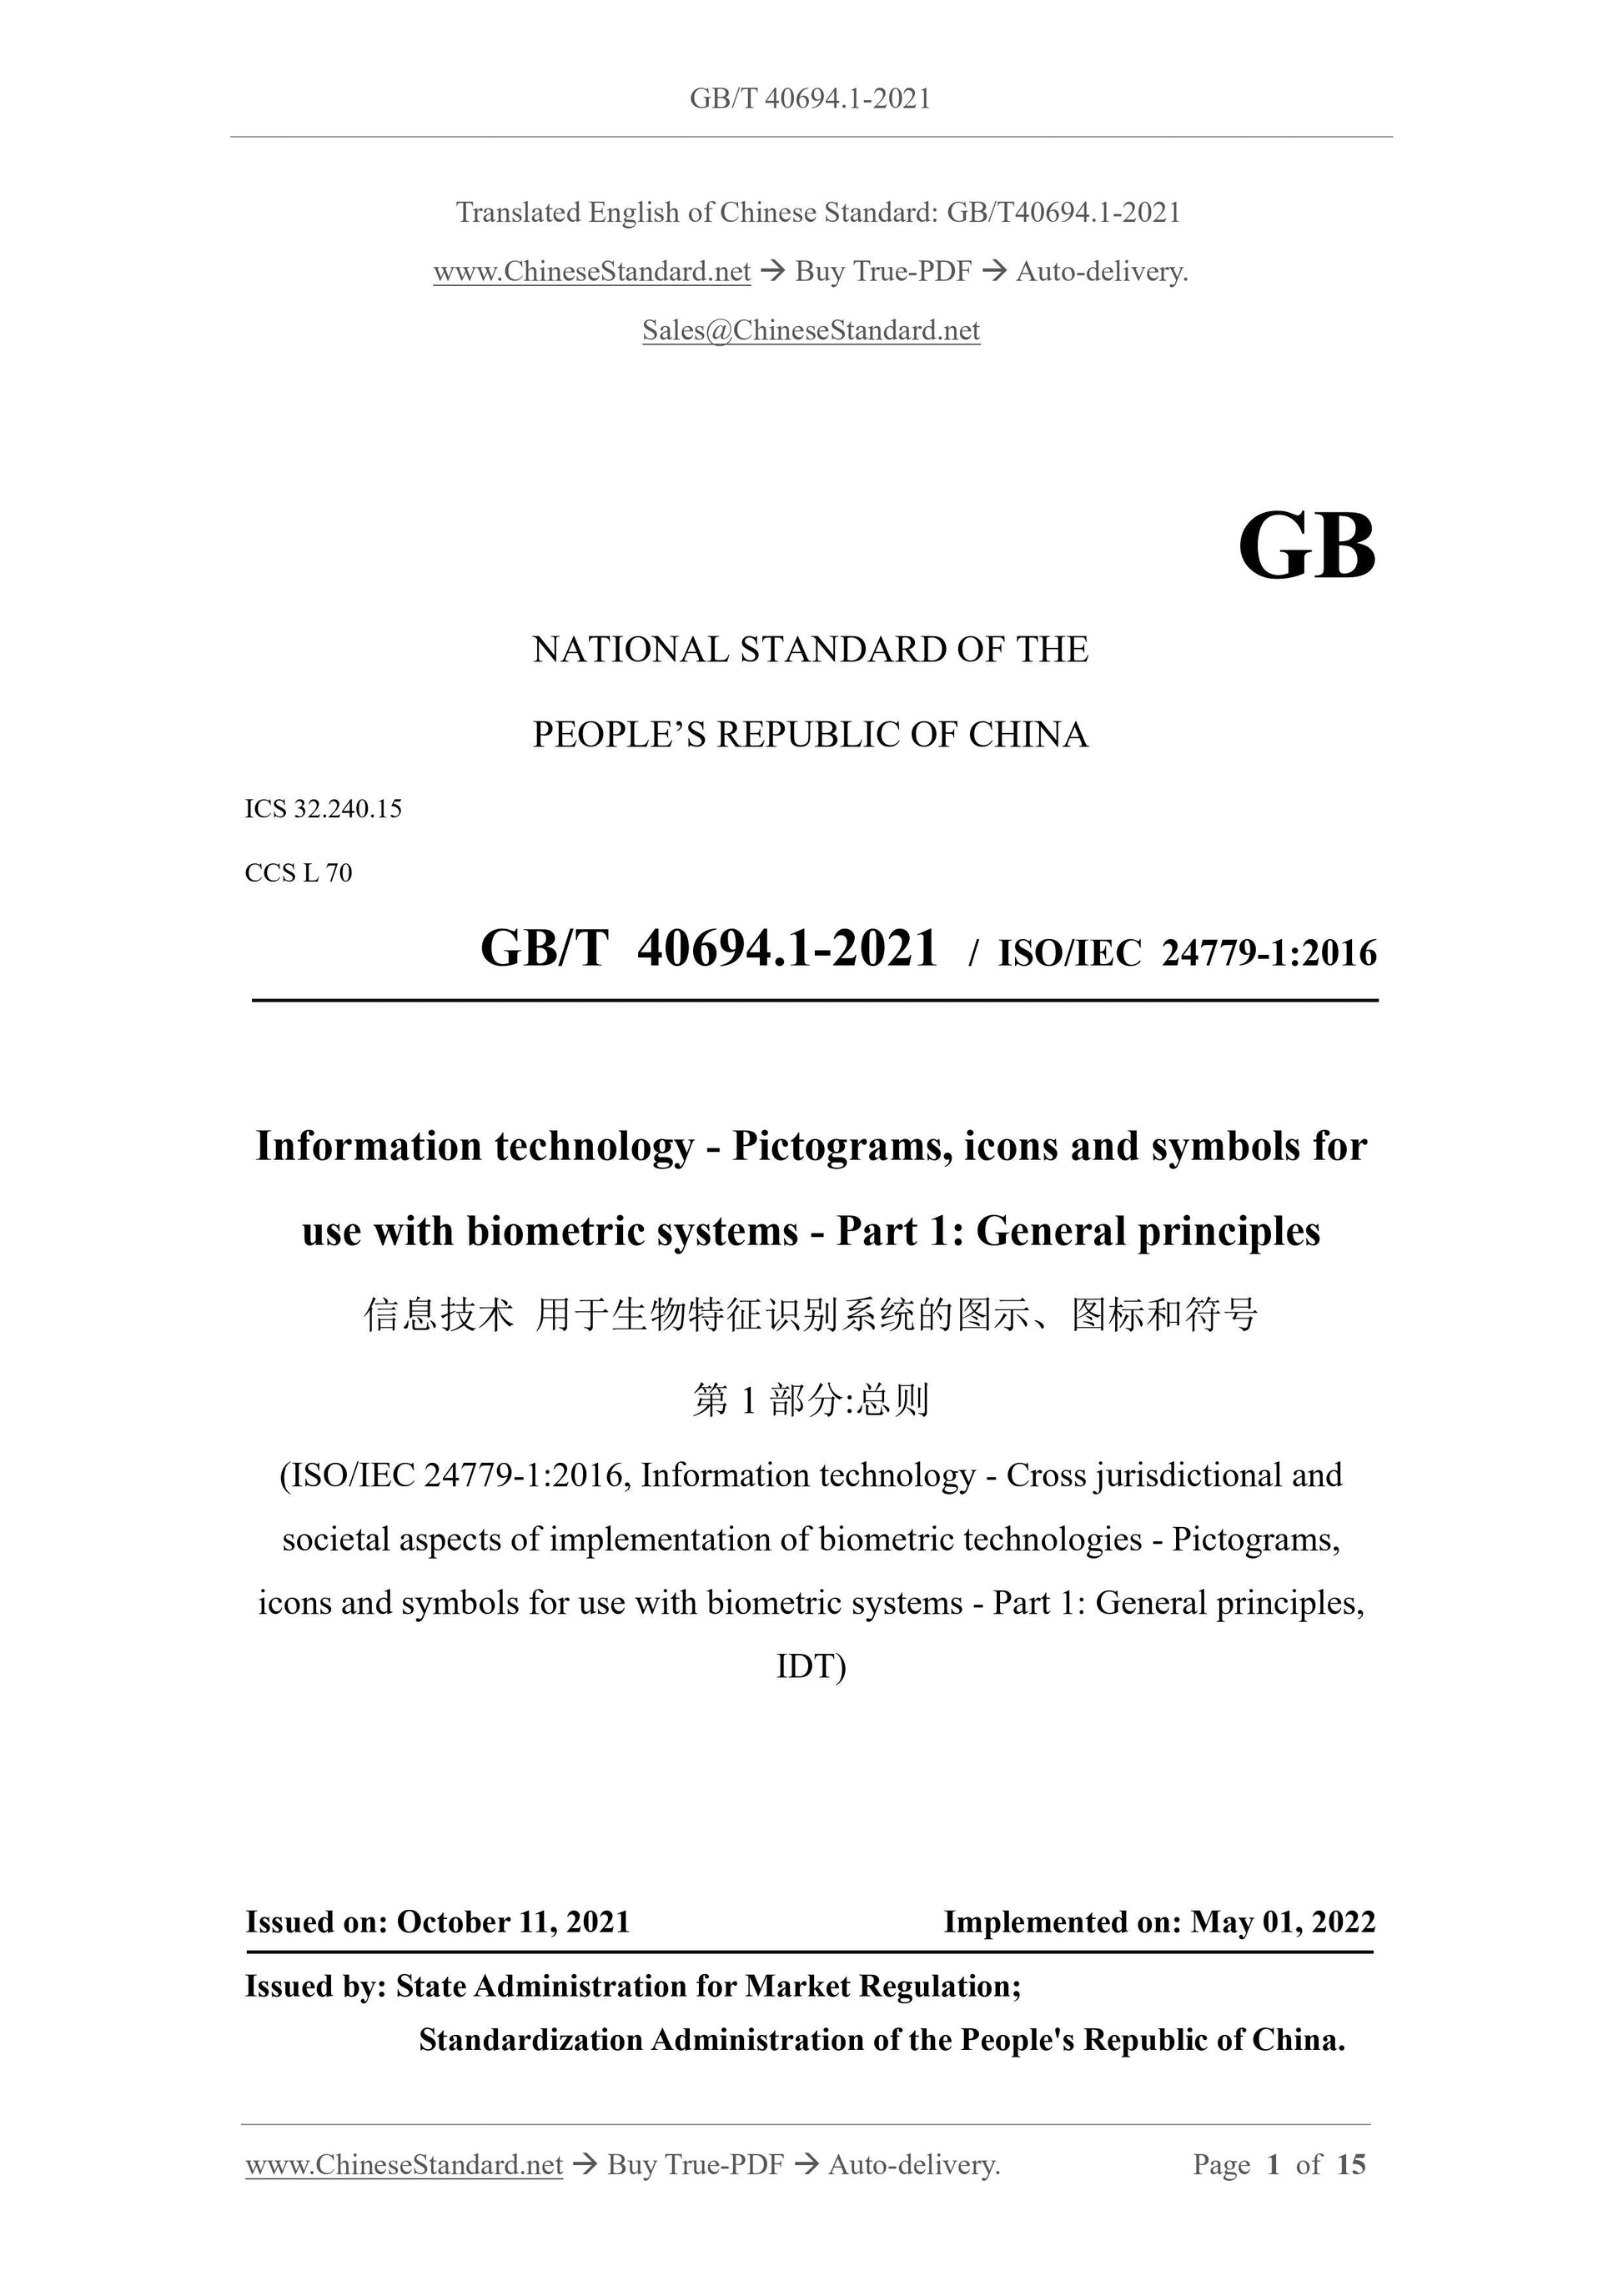 GBT40694.1-2021 Page 1